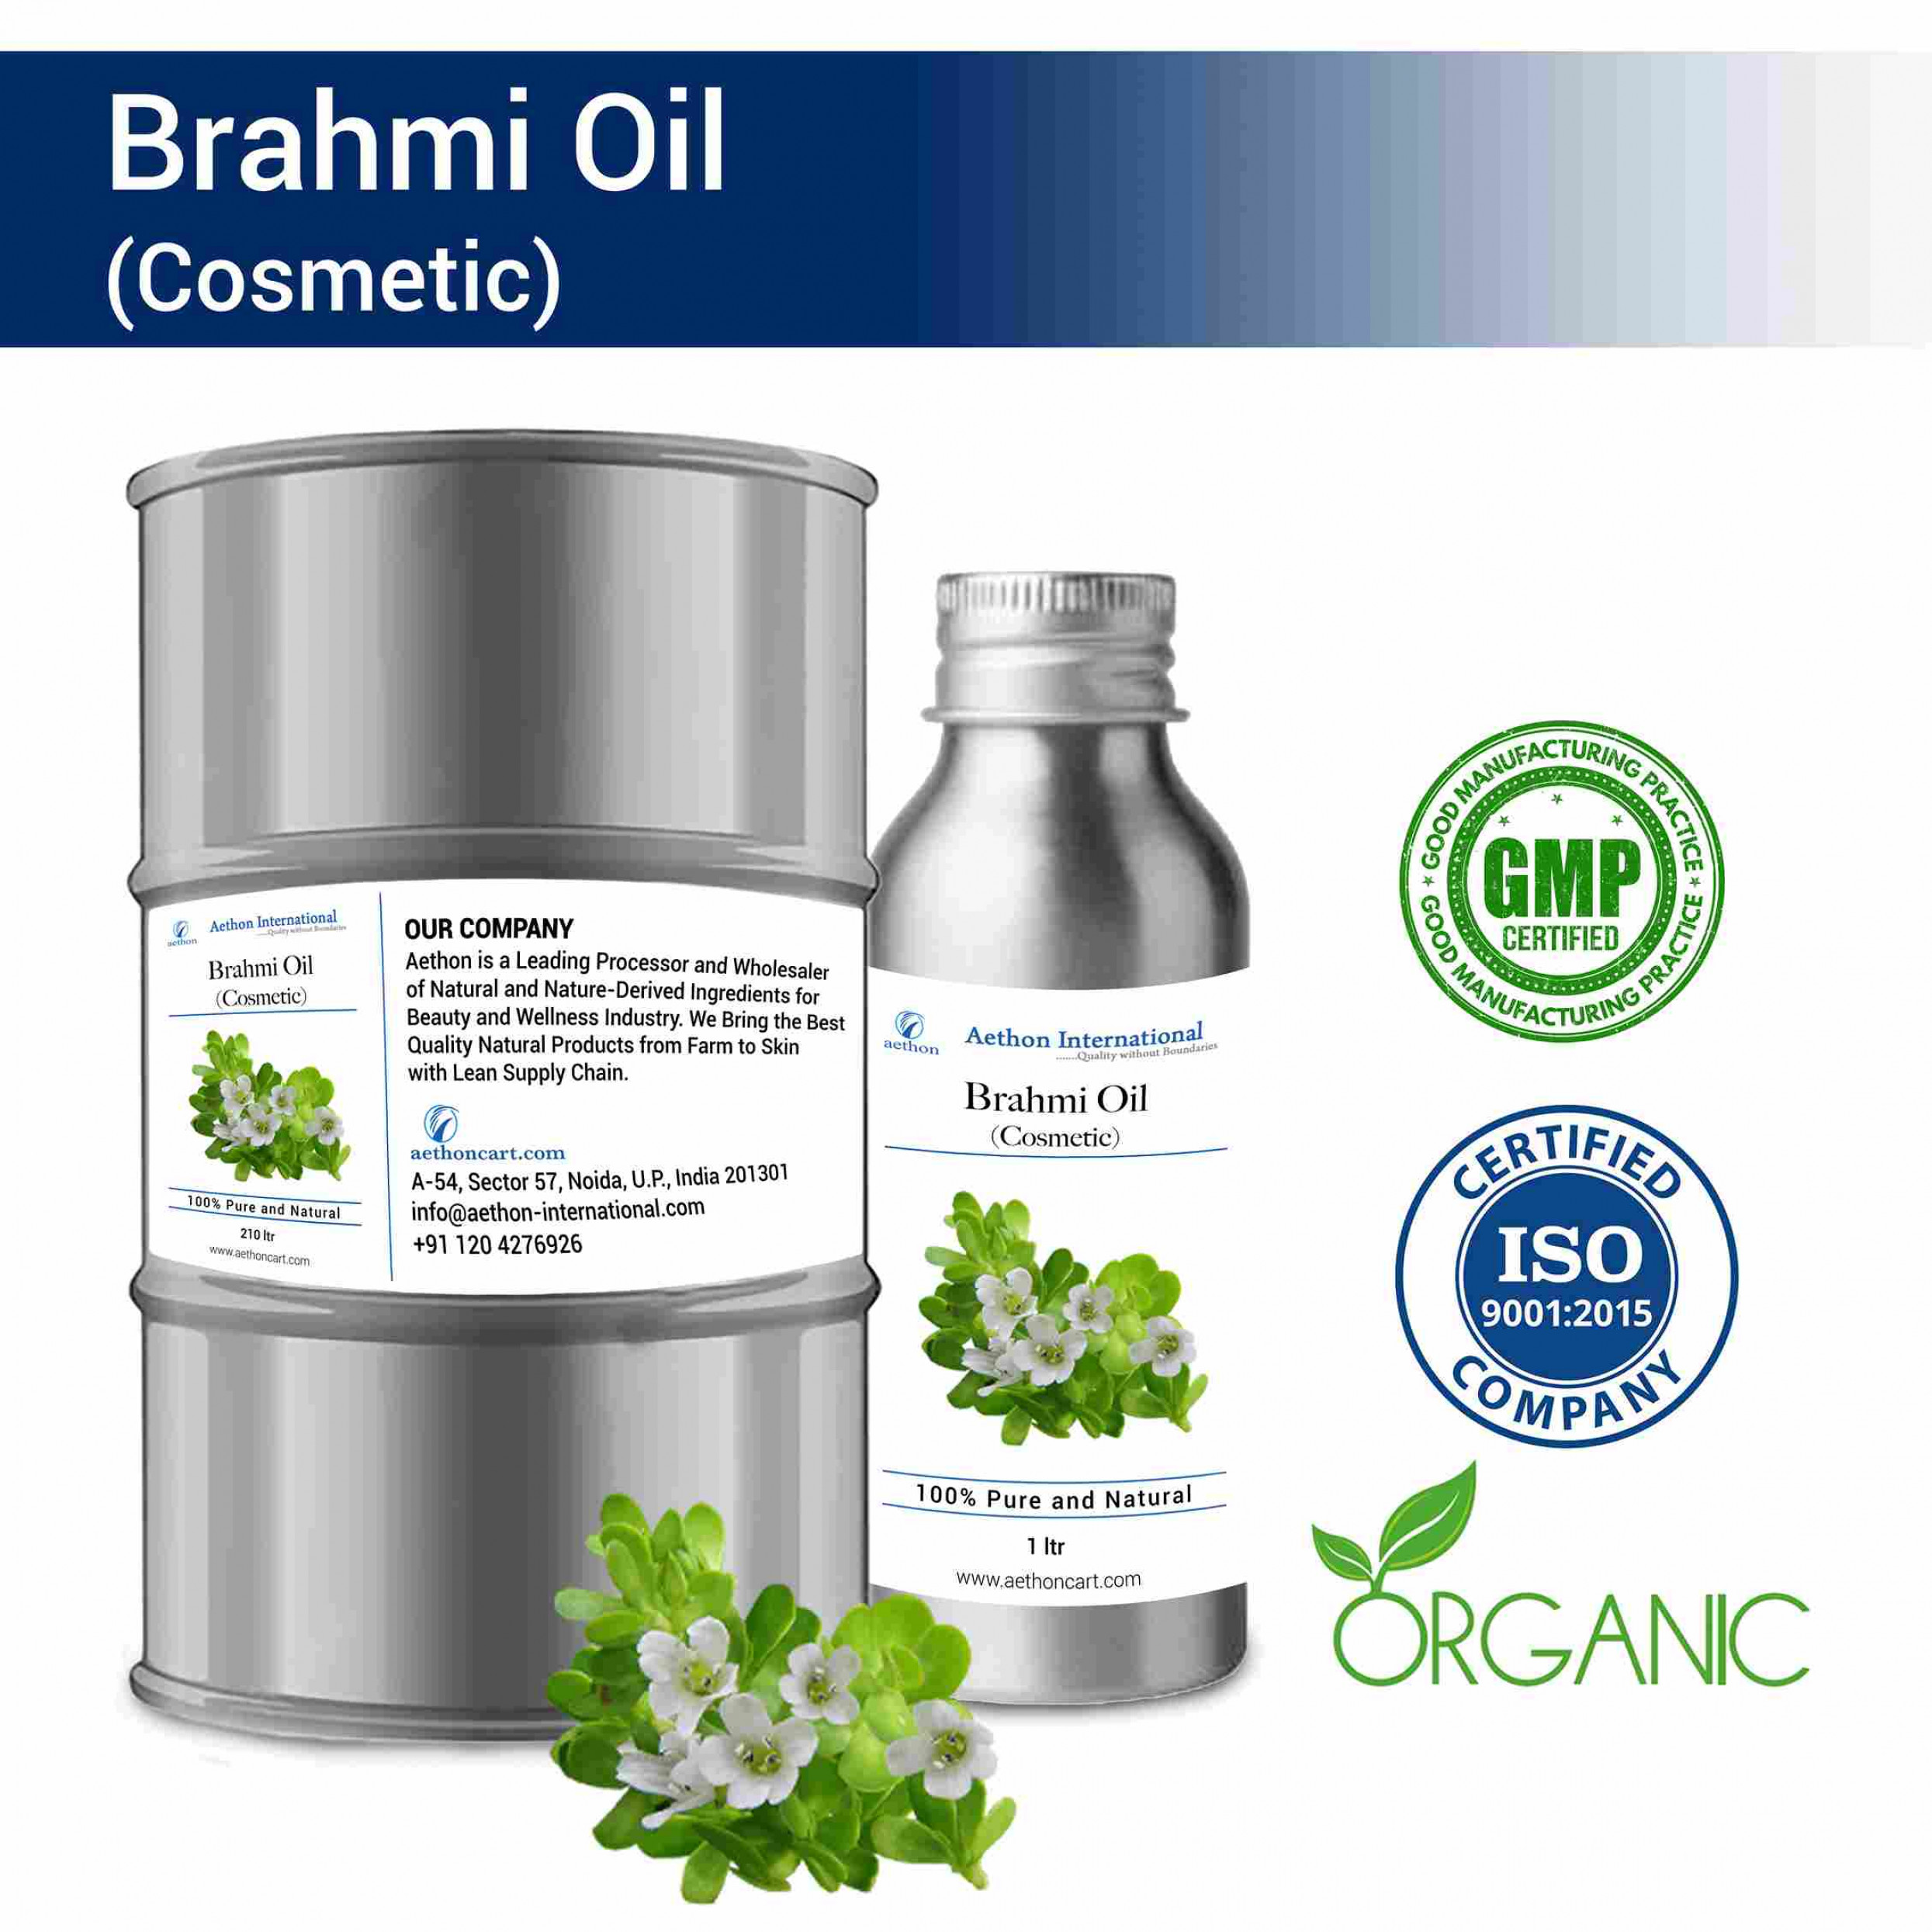 Brahmi Oil (Cosmetic)